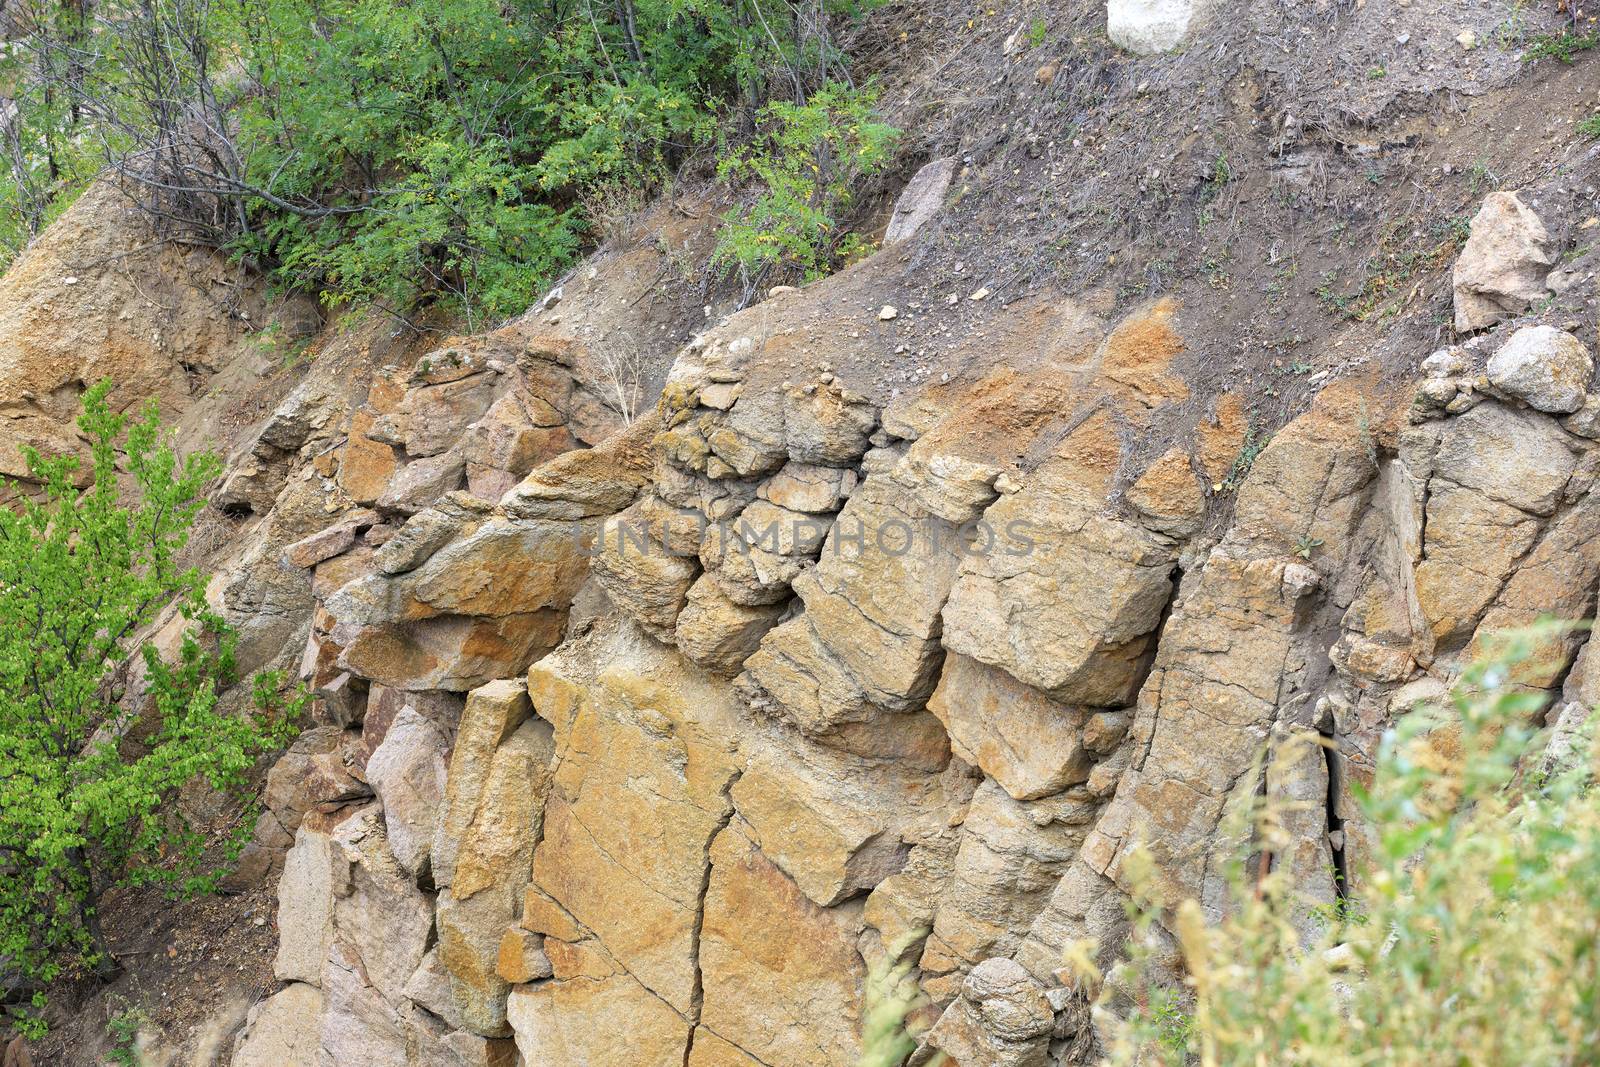 Erosion, destruction of soil and rock on a hillside after heavy rain among green vegetation.